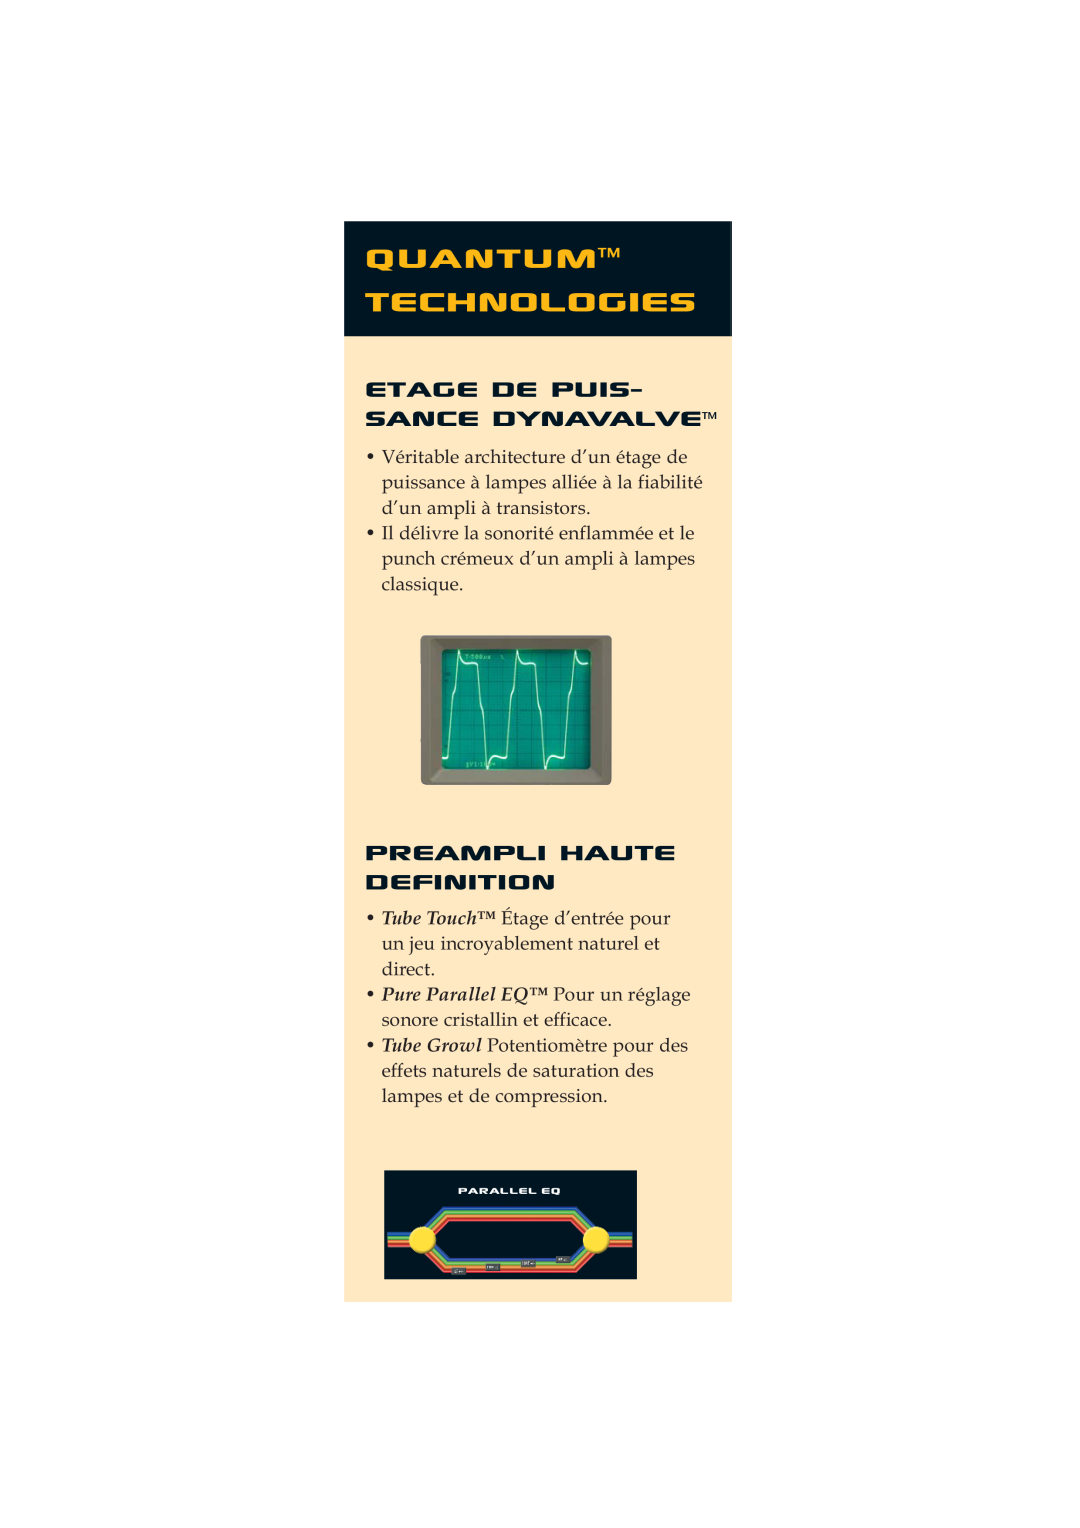 Quantum Audio Speaker manual etage de puis- sance DynavalveTM, Preampli haute definition, Quantum technologies 